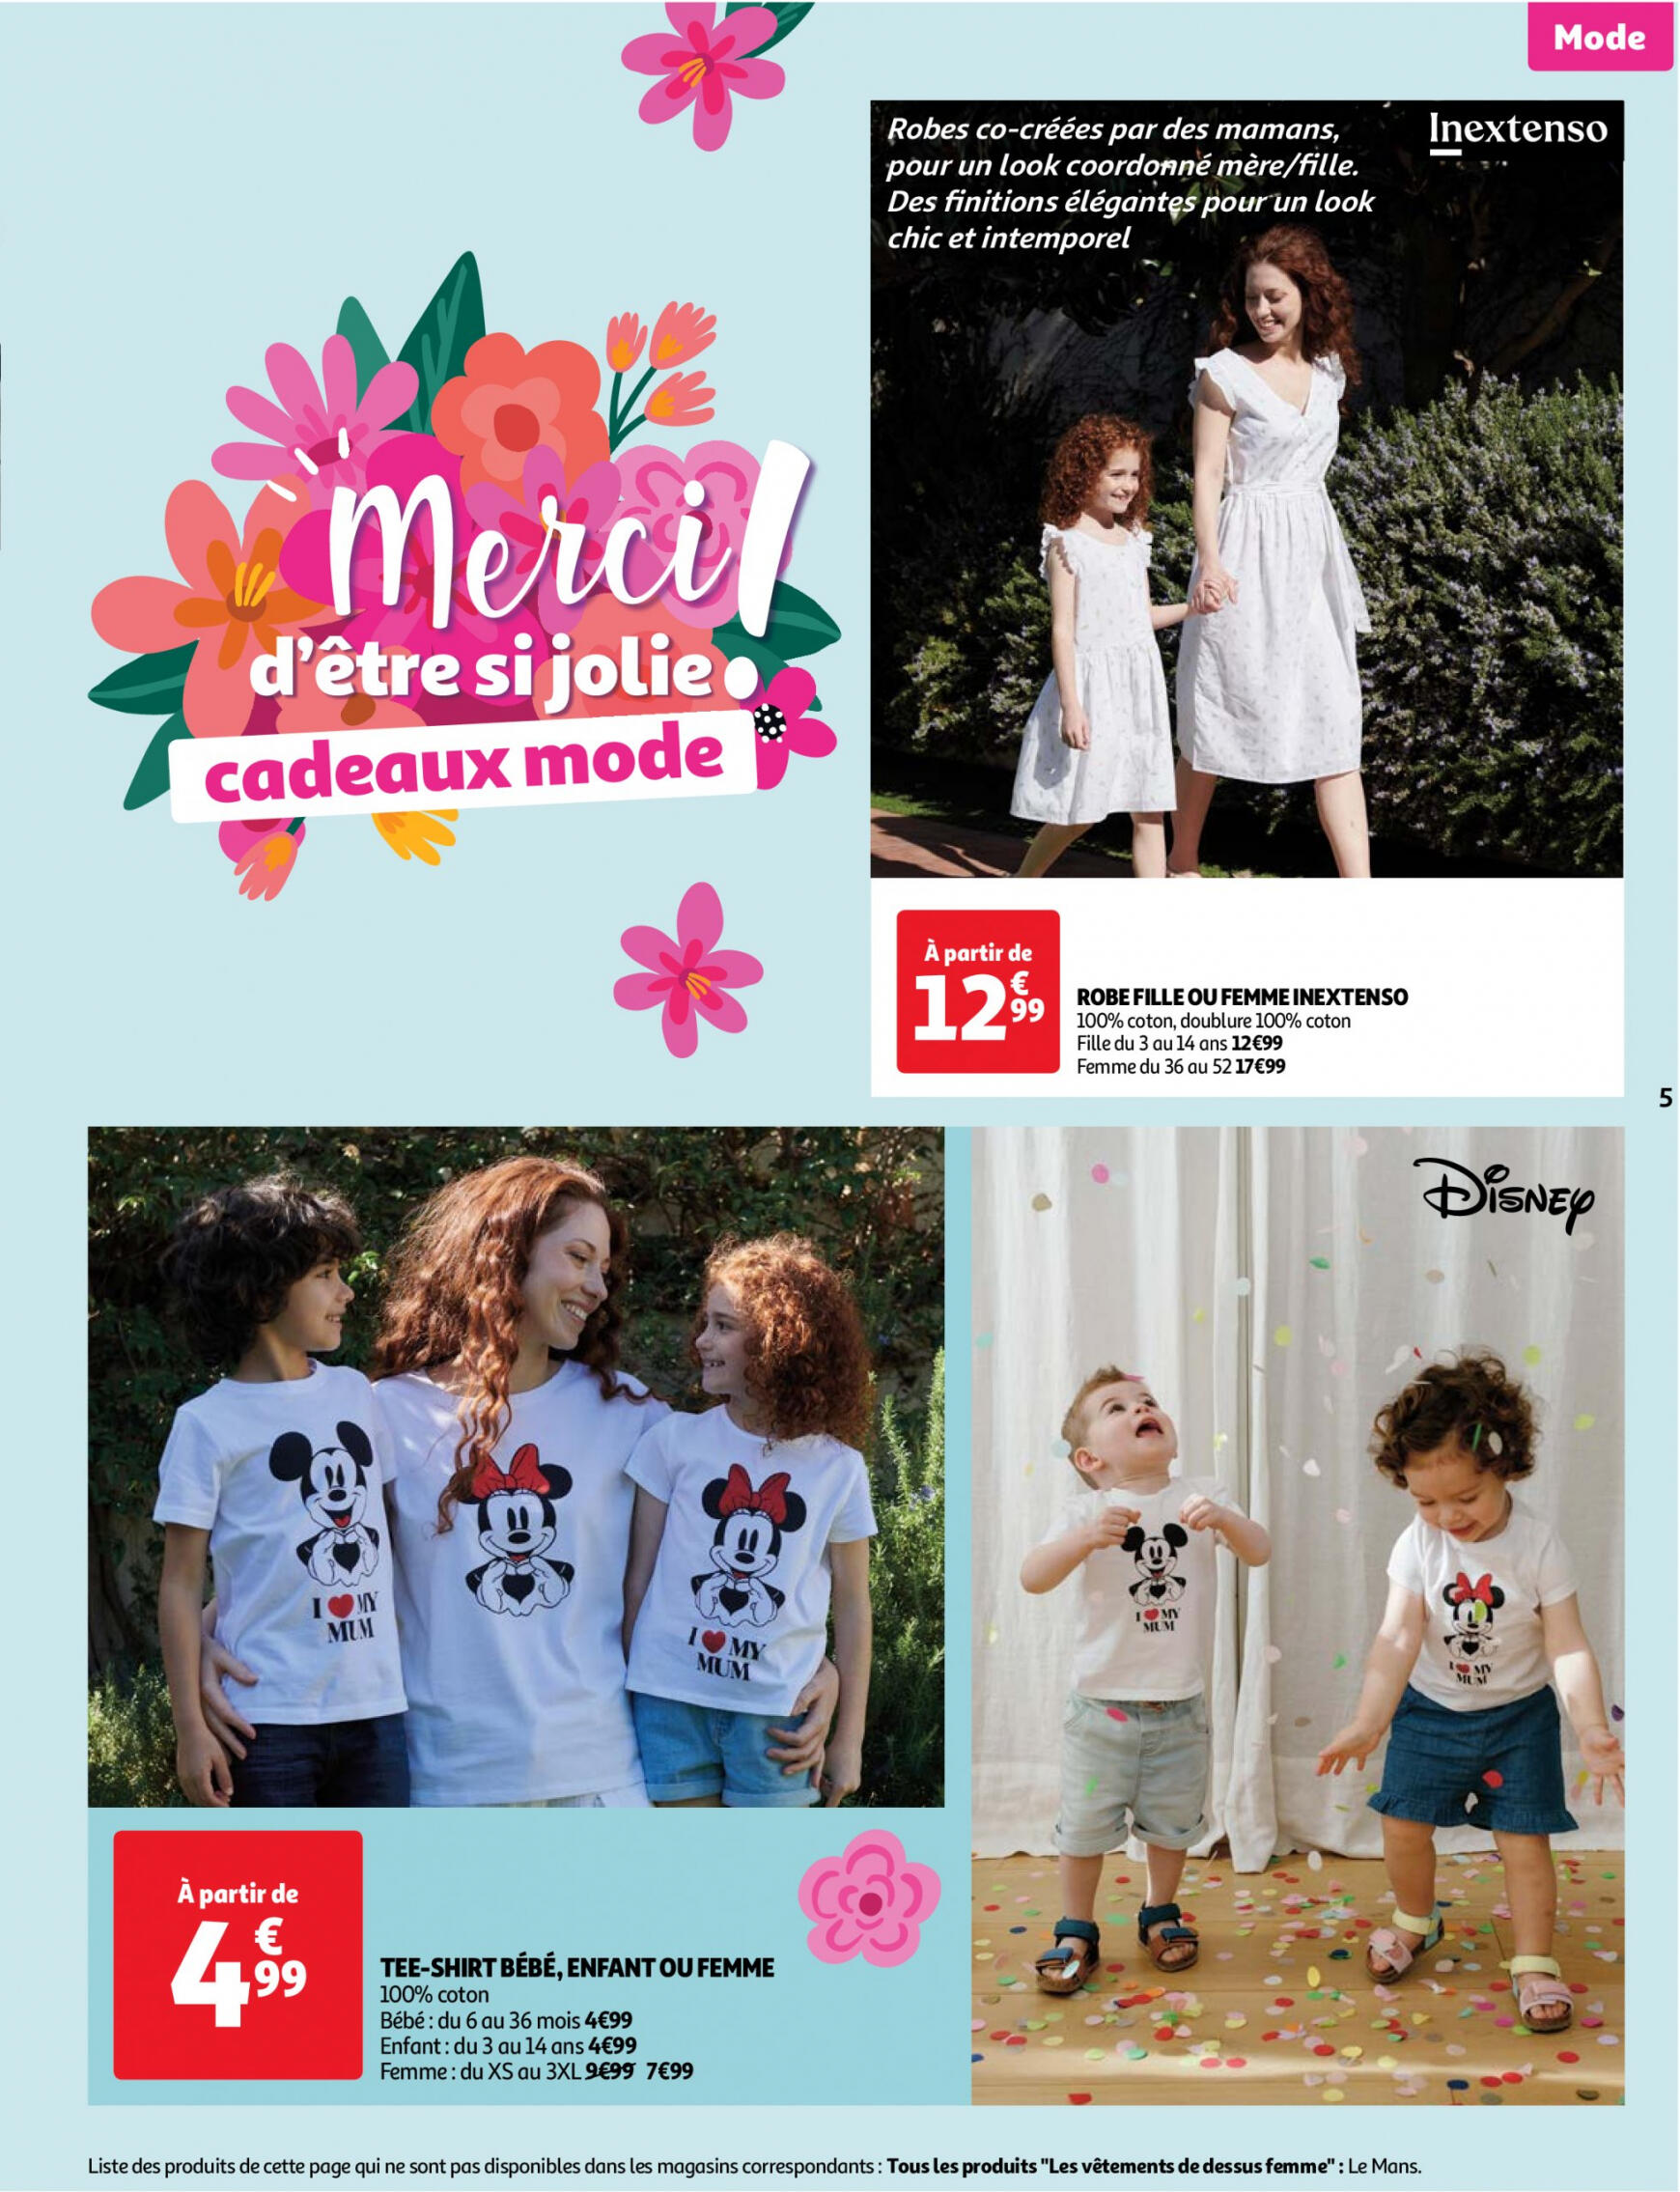 auchan - Auchan - Merci maman folder huidig 14.05. - 26.05. - page: 5